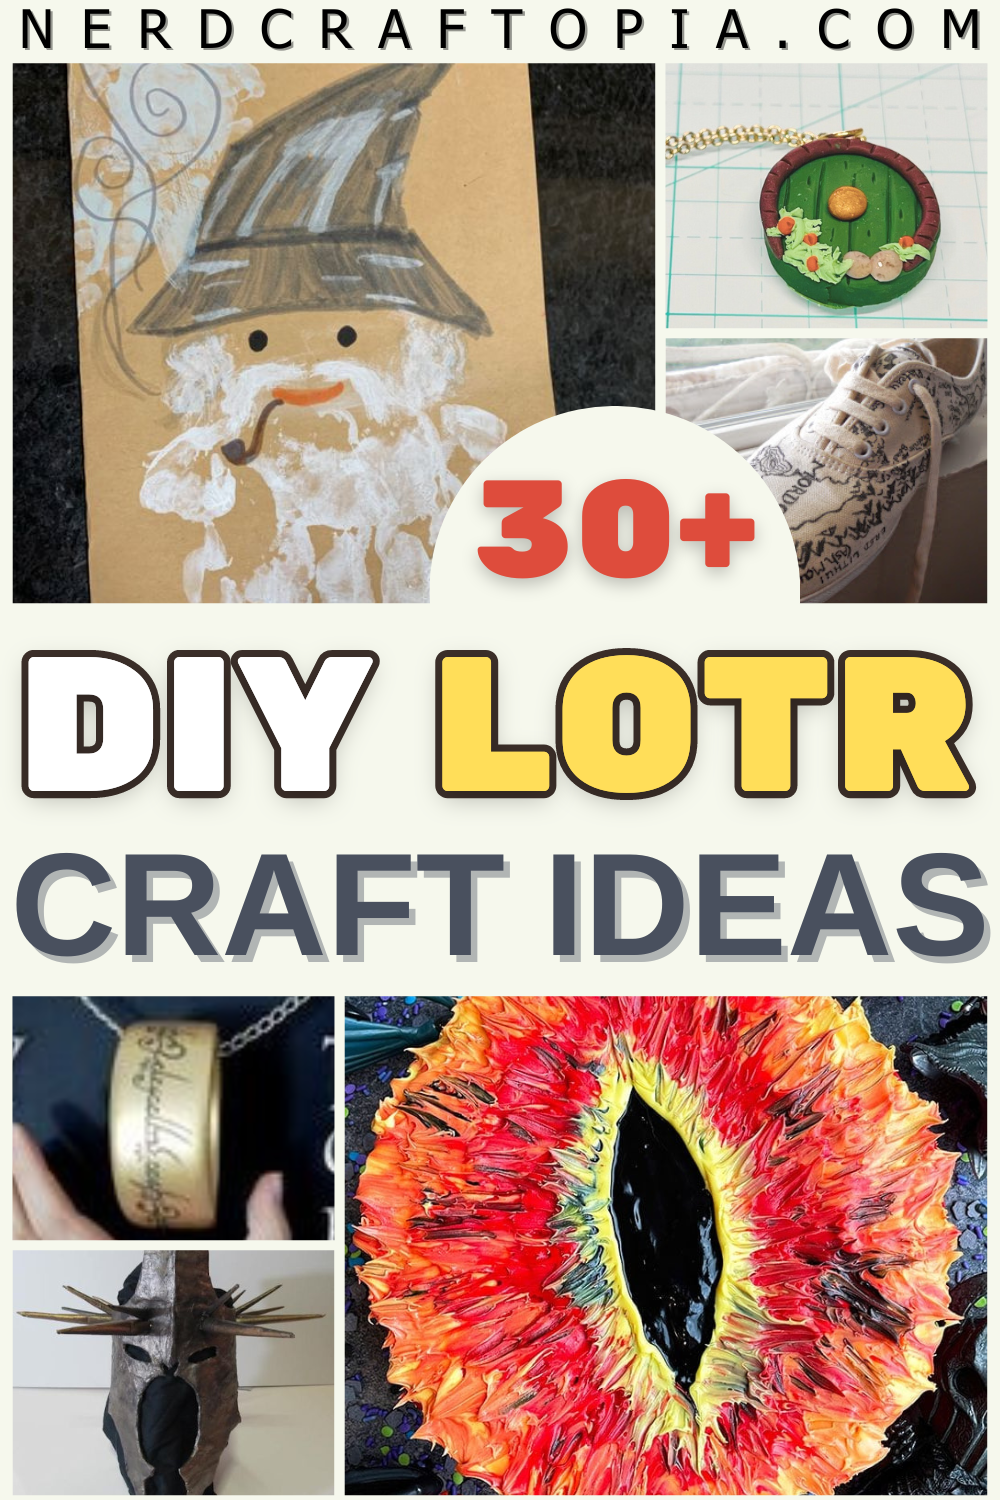 30+ DIY LOTR Craft Ideas